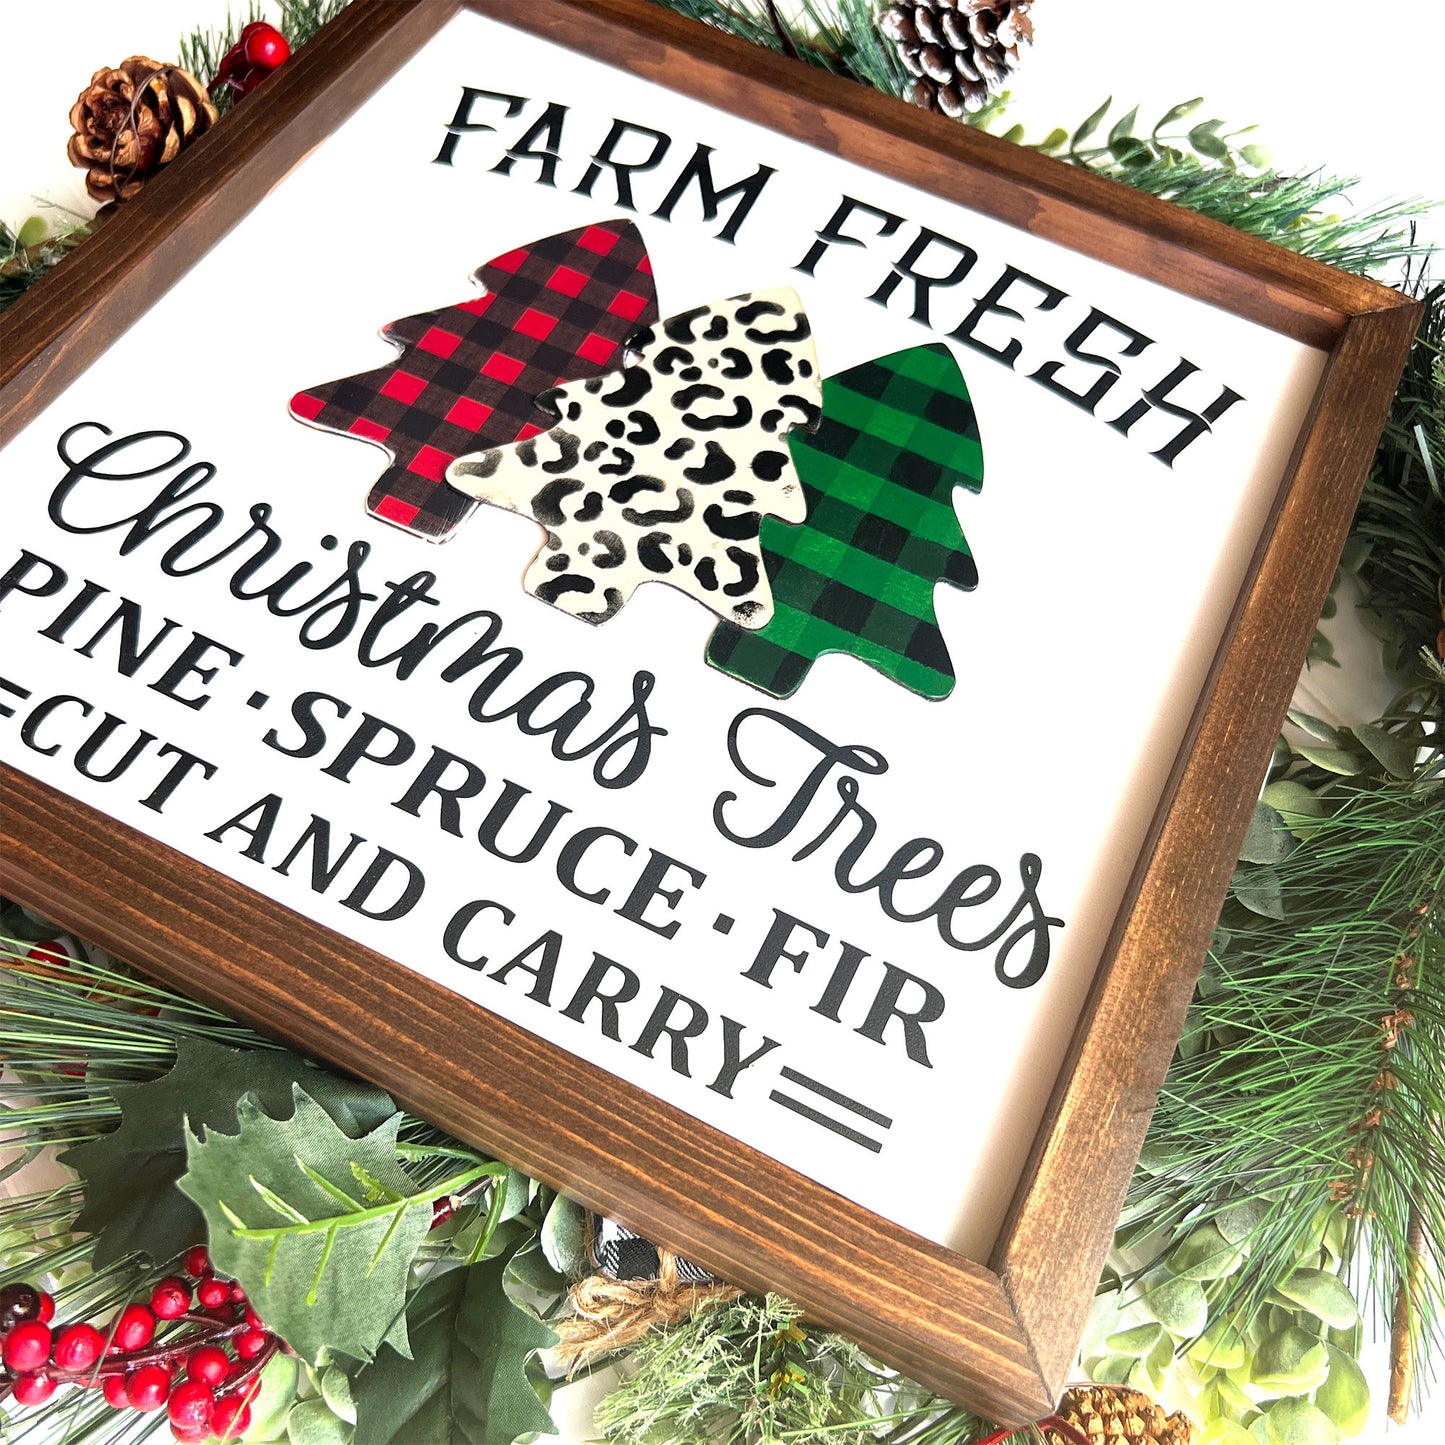 Farm fresh Christmas trees, Christmas wood sign.